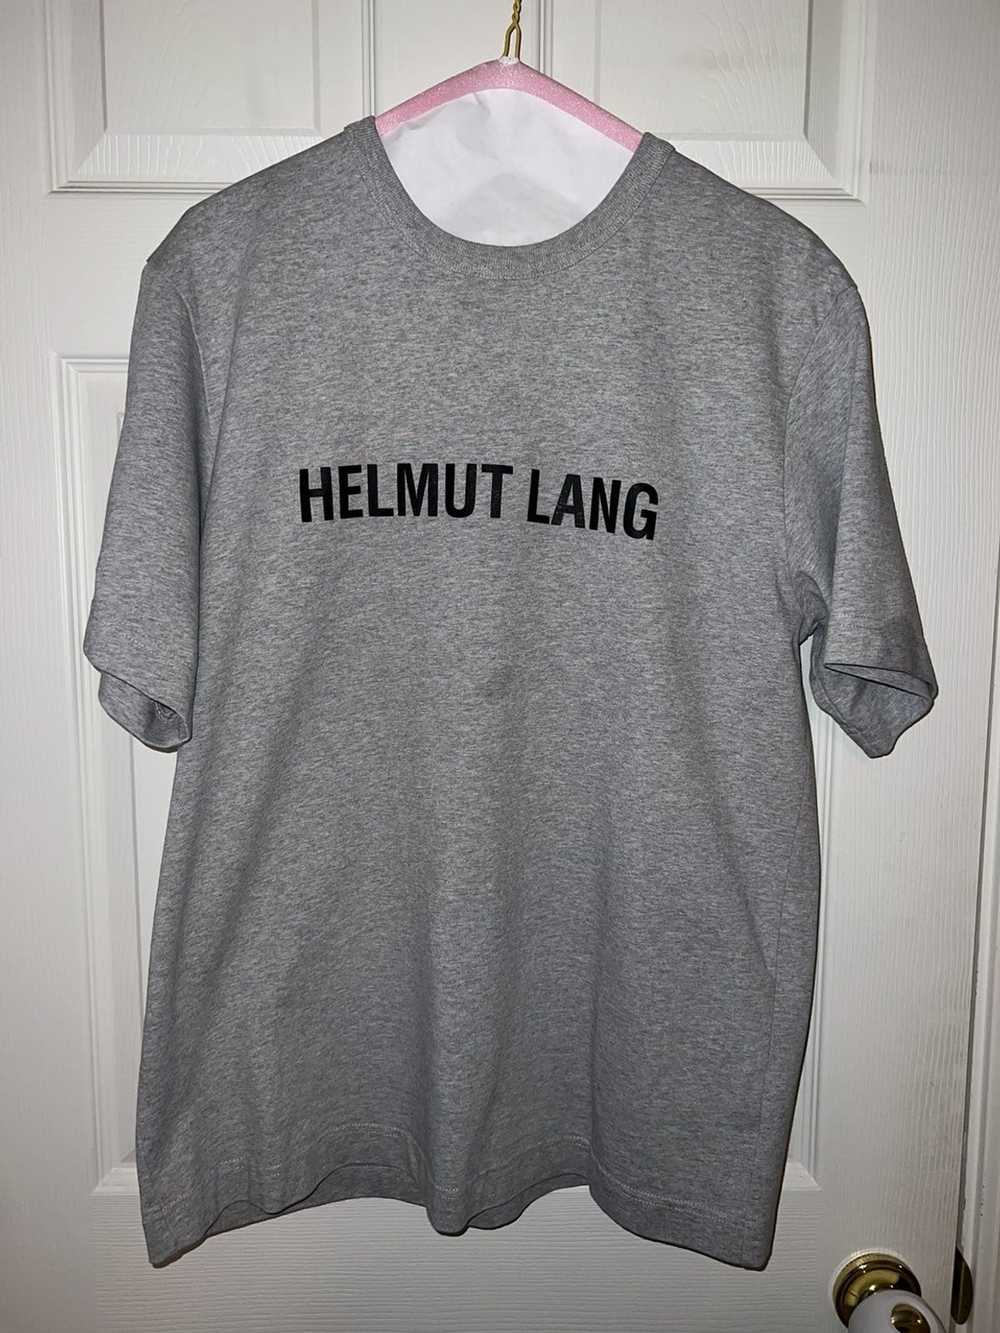 Helmut Lang Helmut Lang Grey T-Shirt - image 1